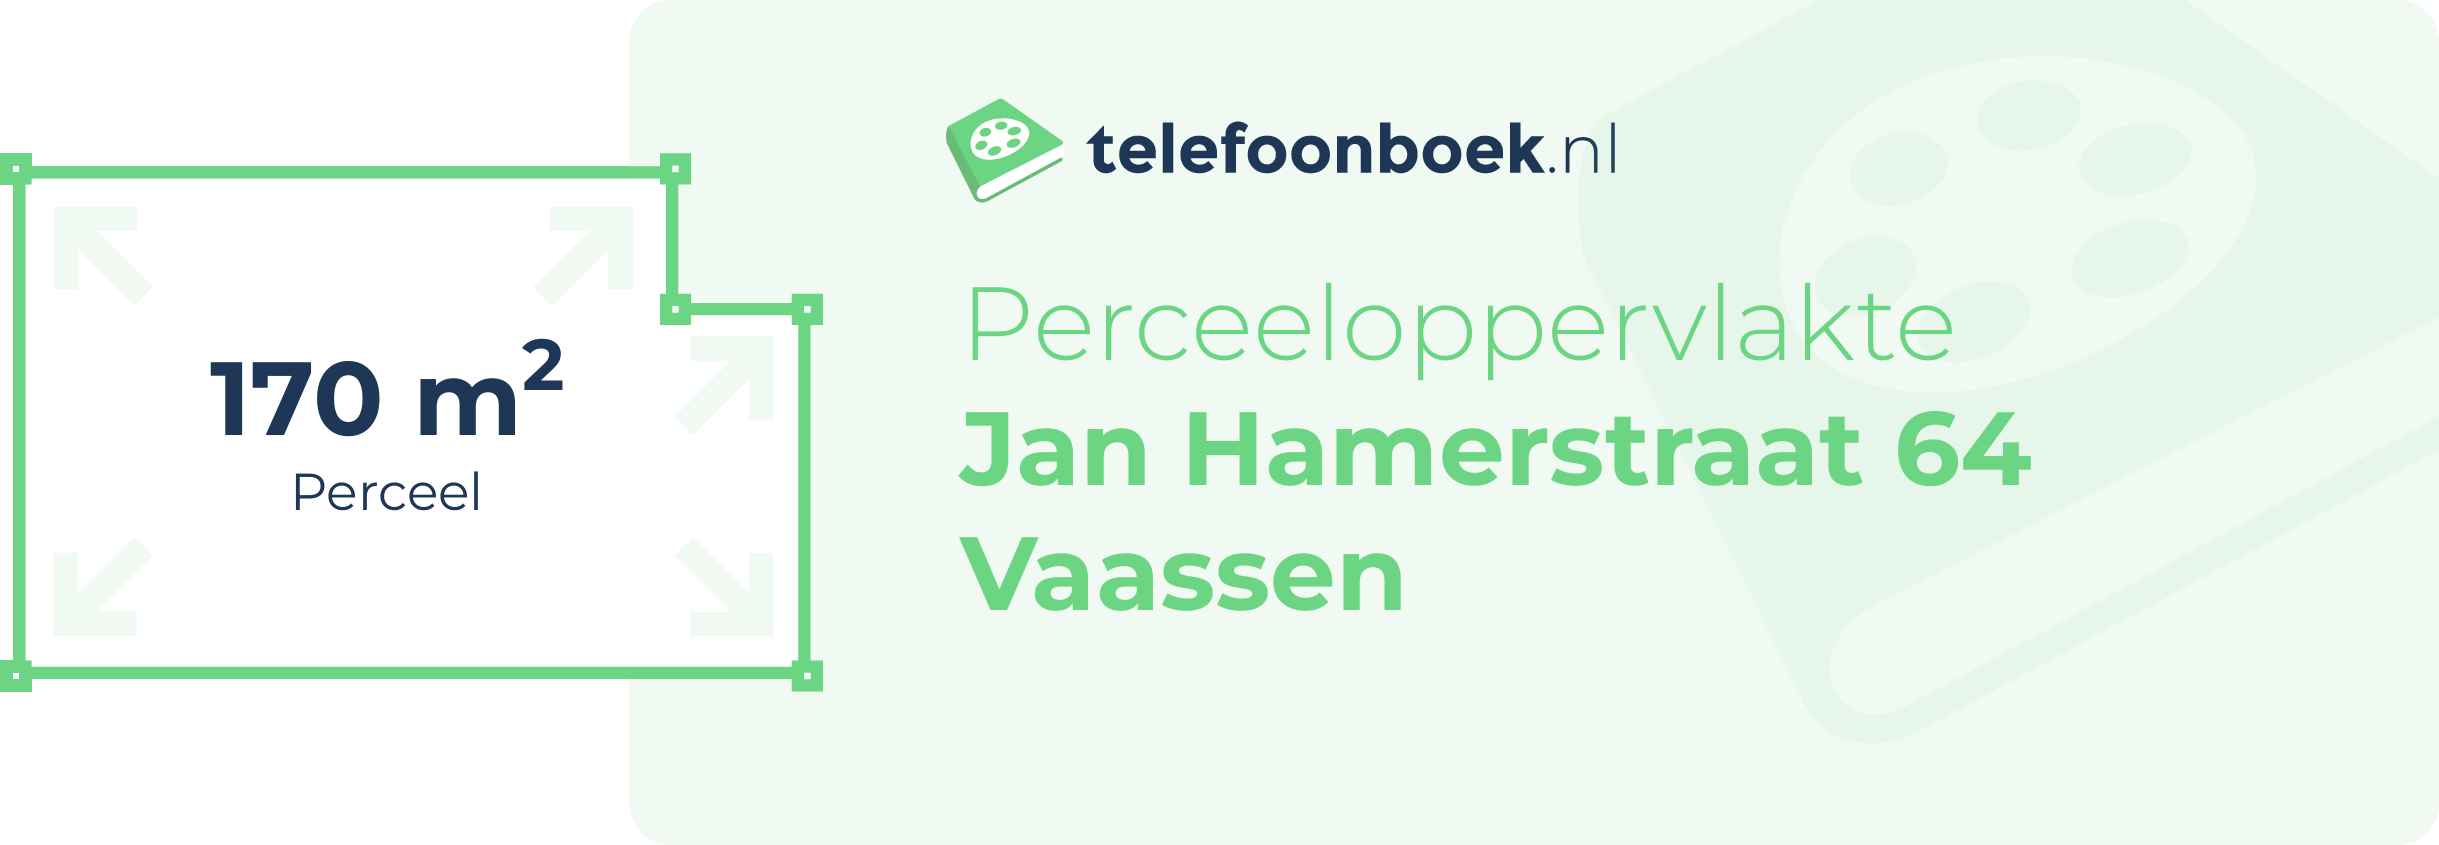 Perceeloppervlakte Jan Hamerstraat 64 Vaassen